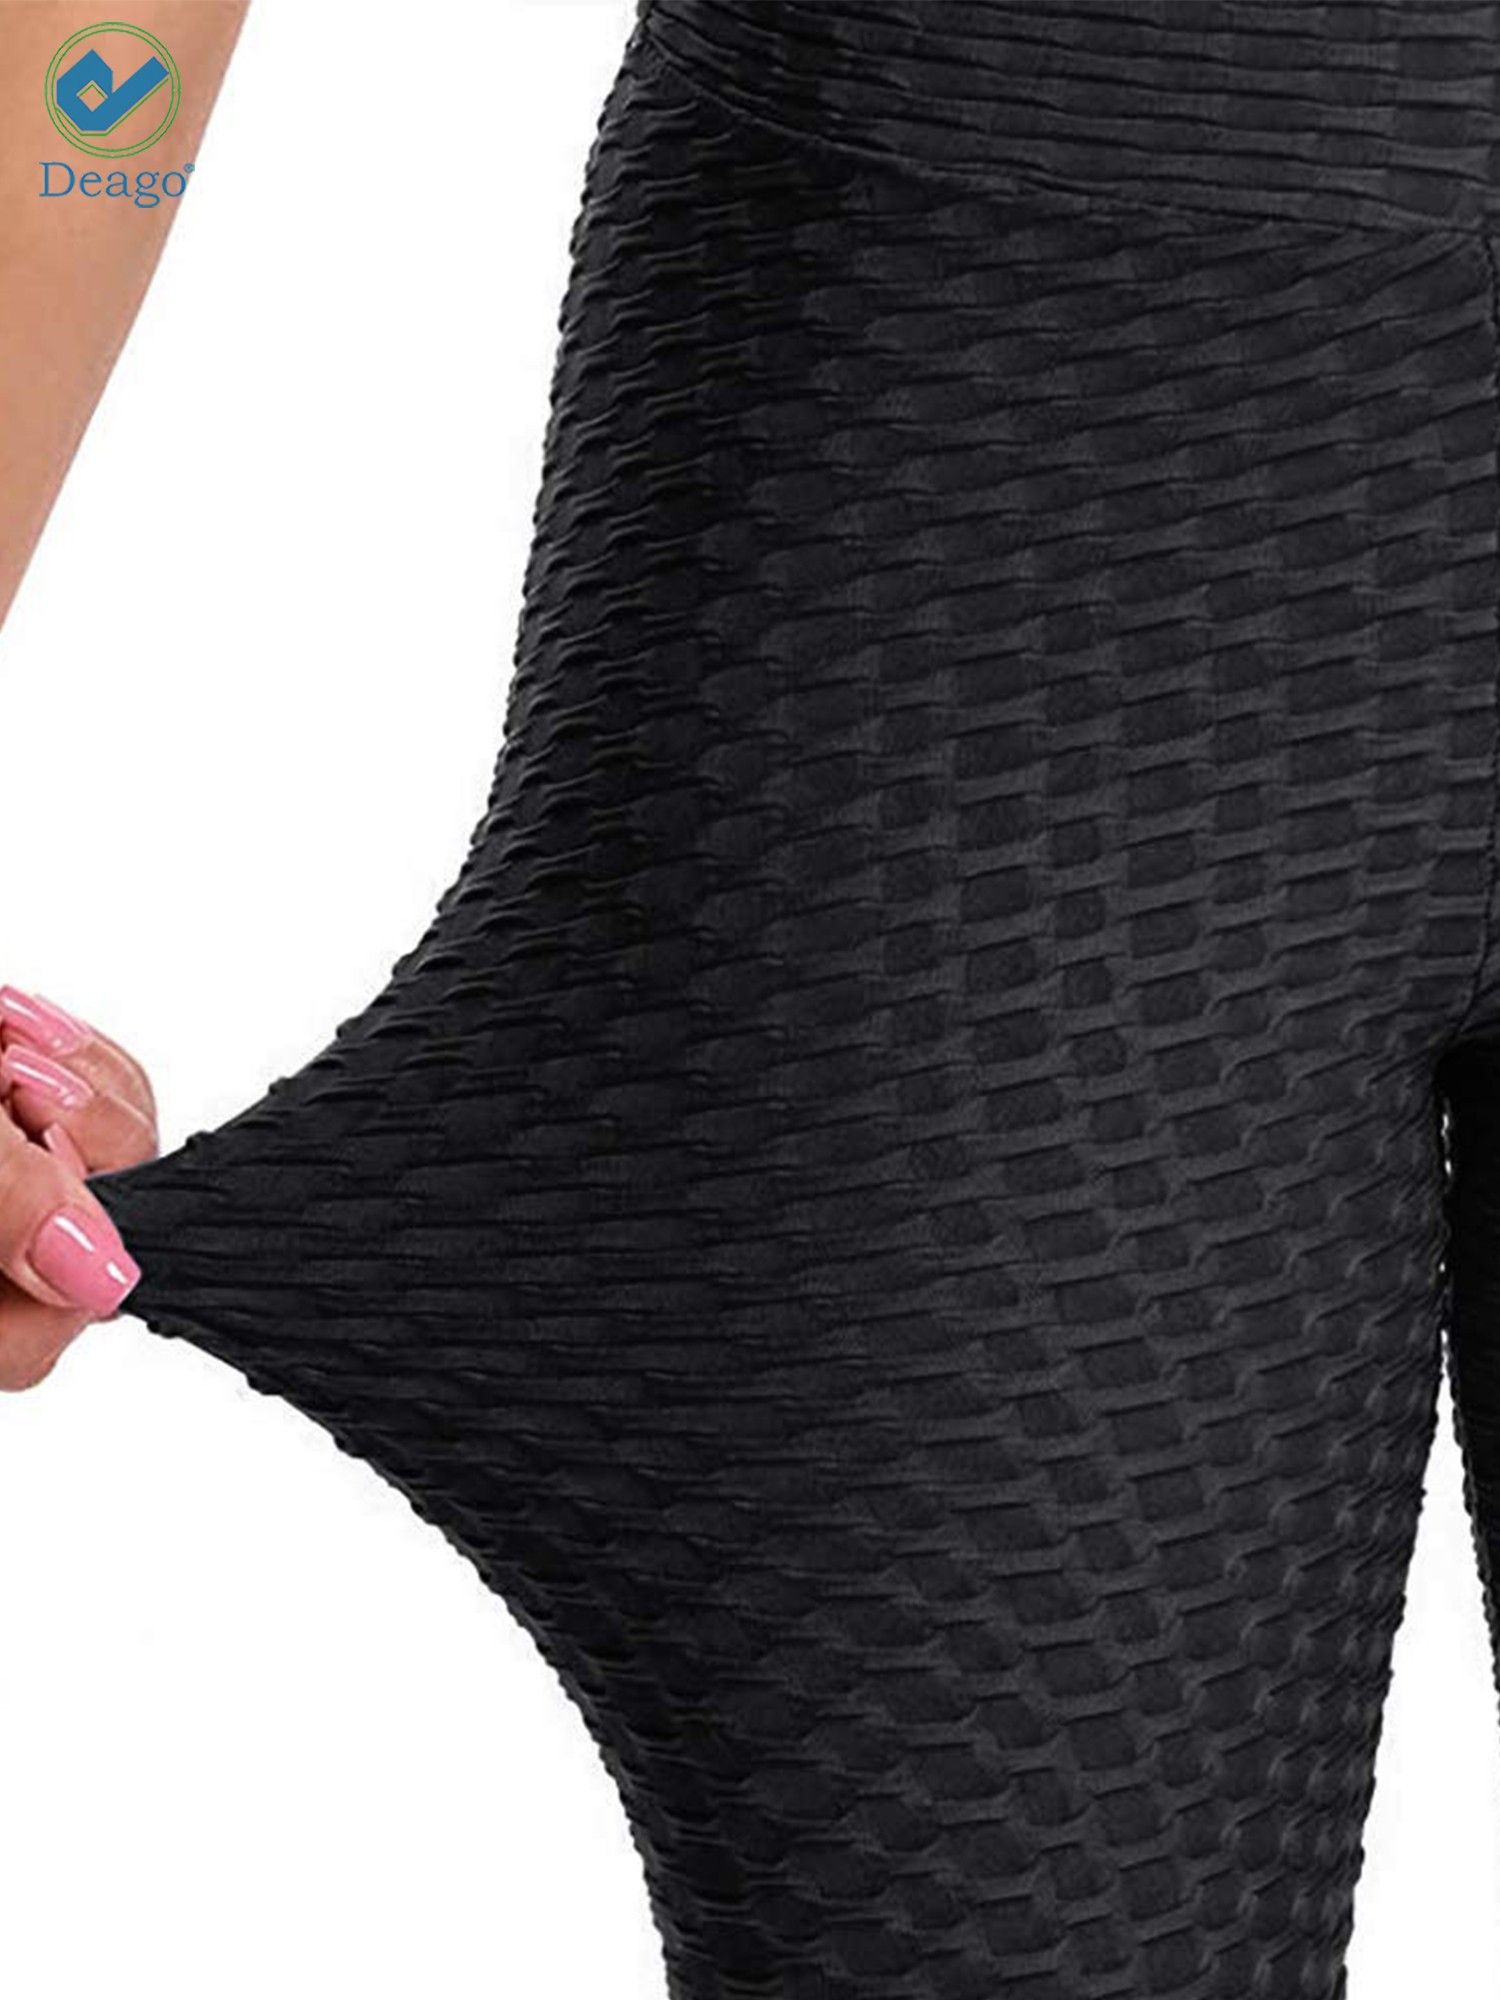 Deago Women's High Waist Yoga Pants Capri Lift up Butt Tummy Control Workout Running Slimming Stretch Sports Leggings (Black,L) - image 5 of 9